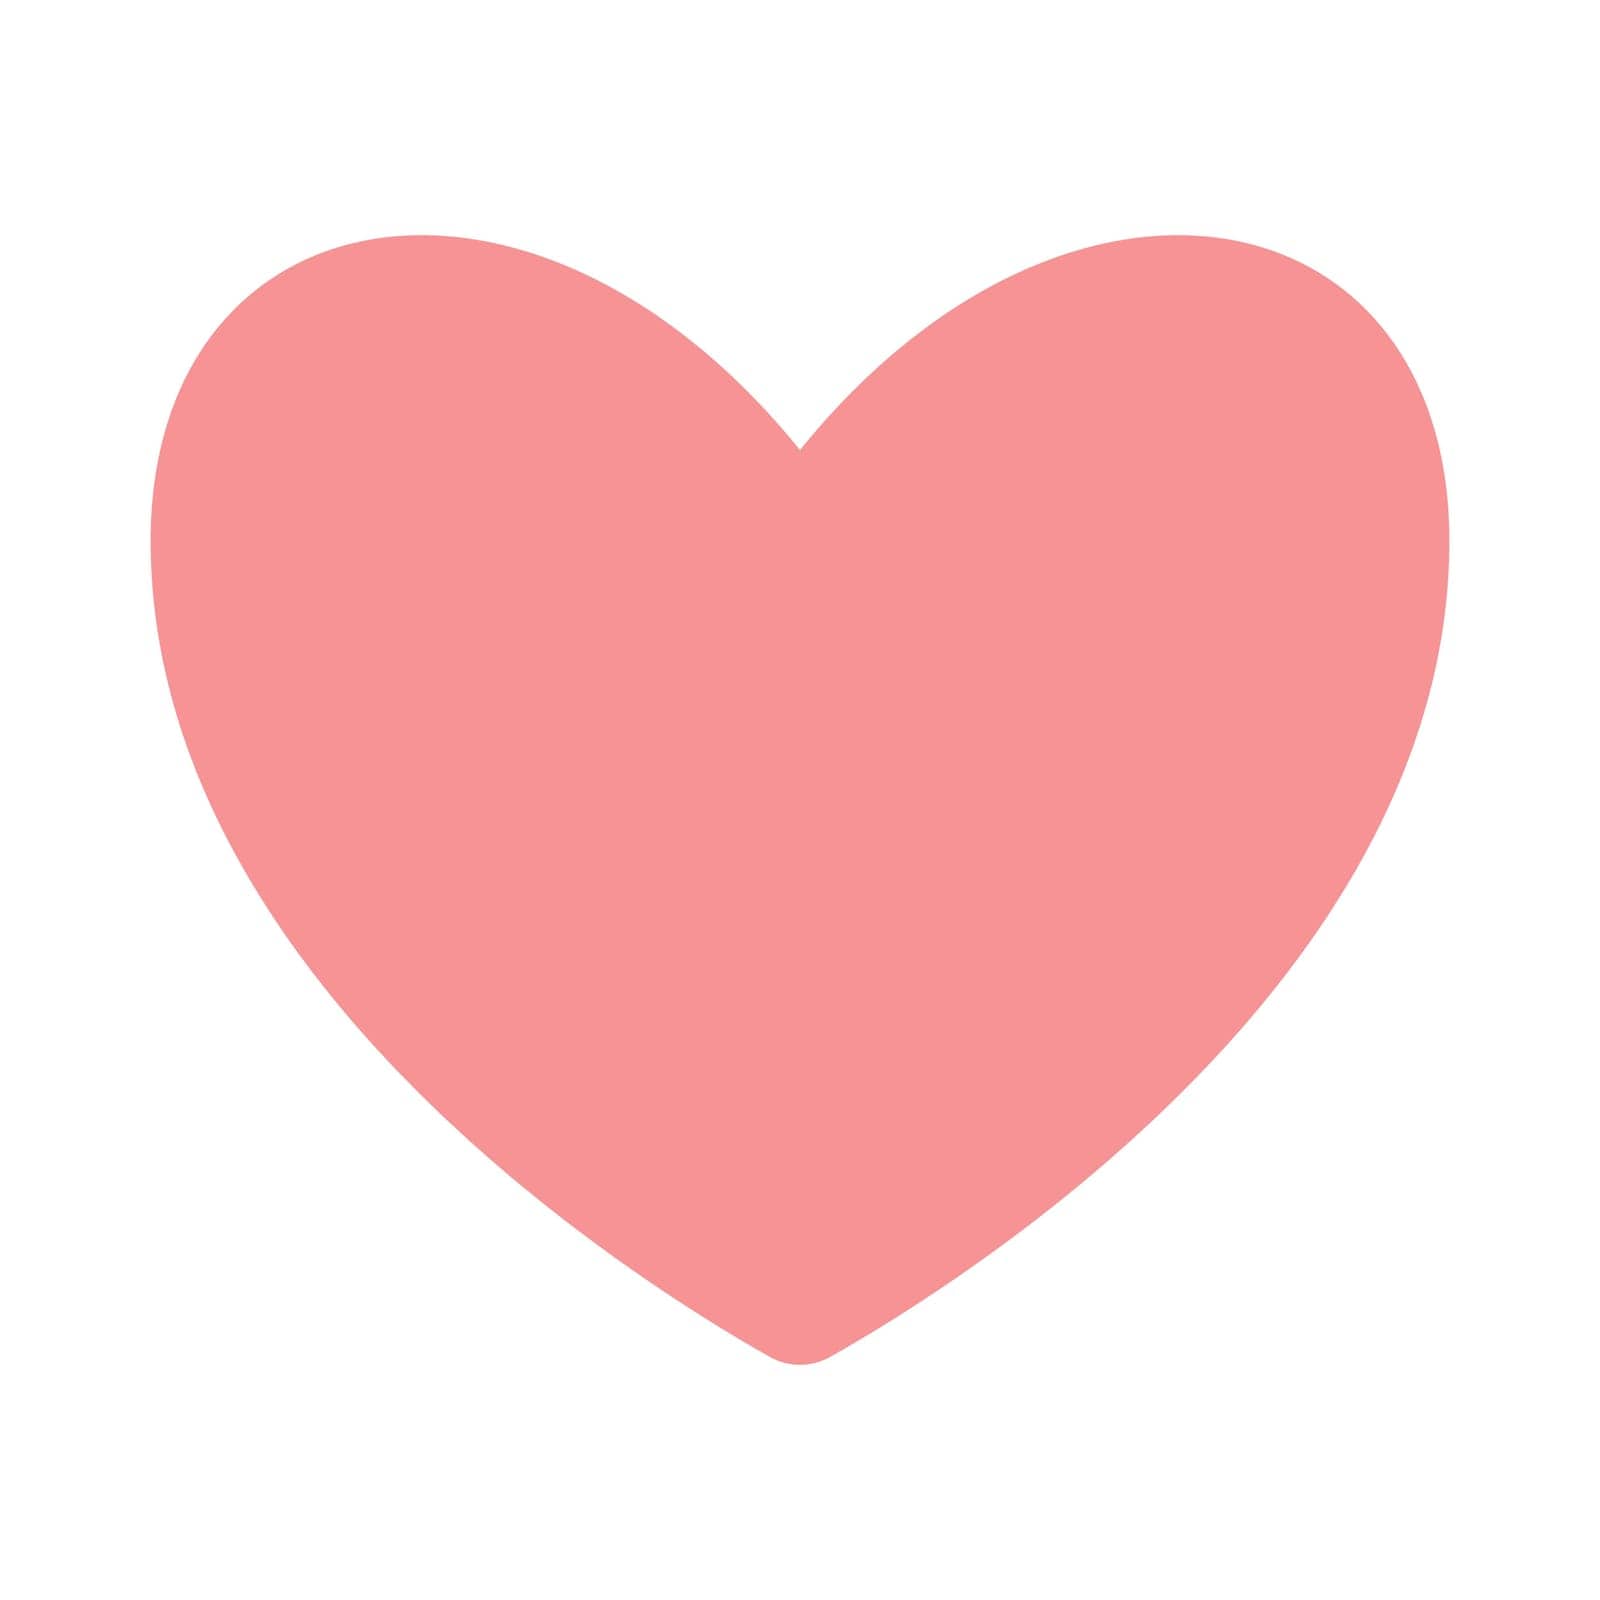 Pink heart, symbol of love. Illustration isolated on white background by Olga_OLiAN